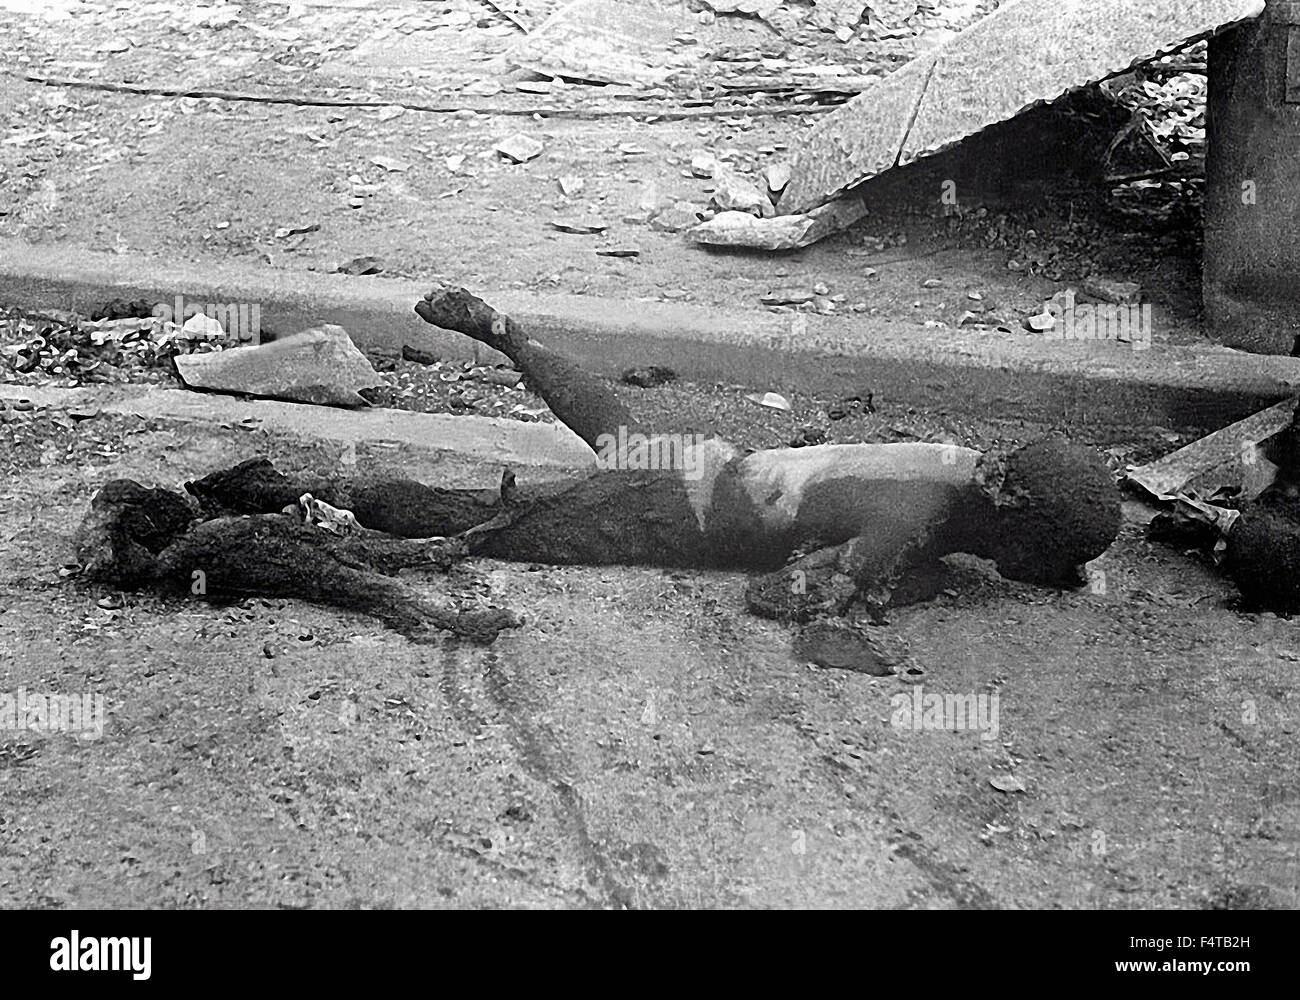 Bombing Of Tokyo1945 Stock Photo